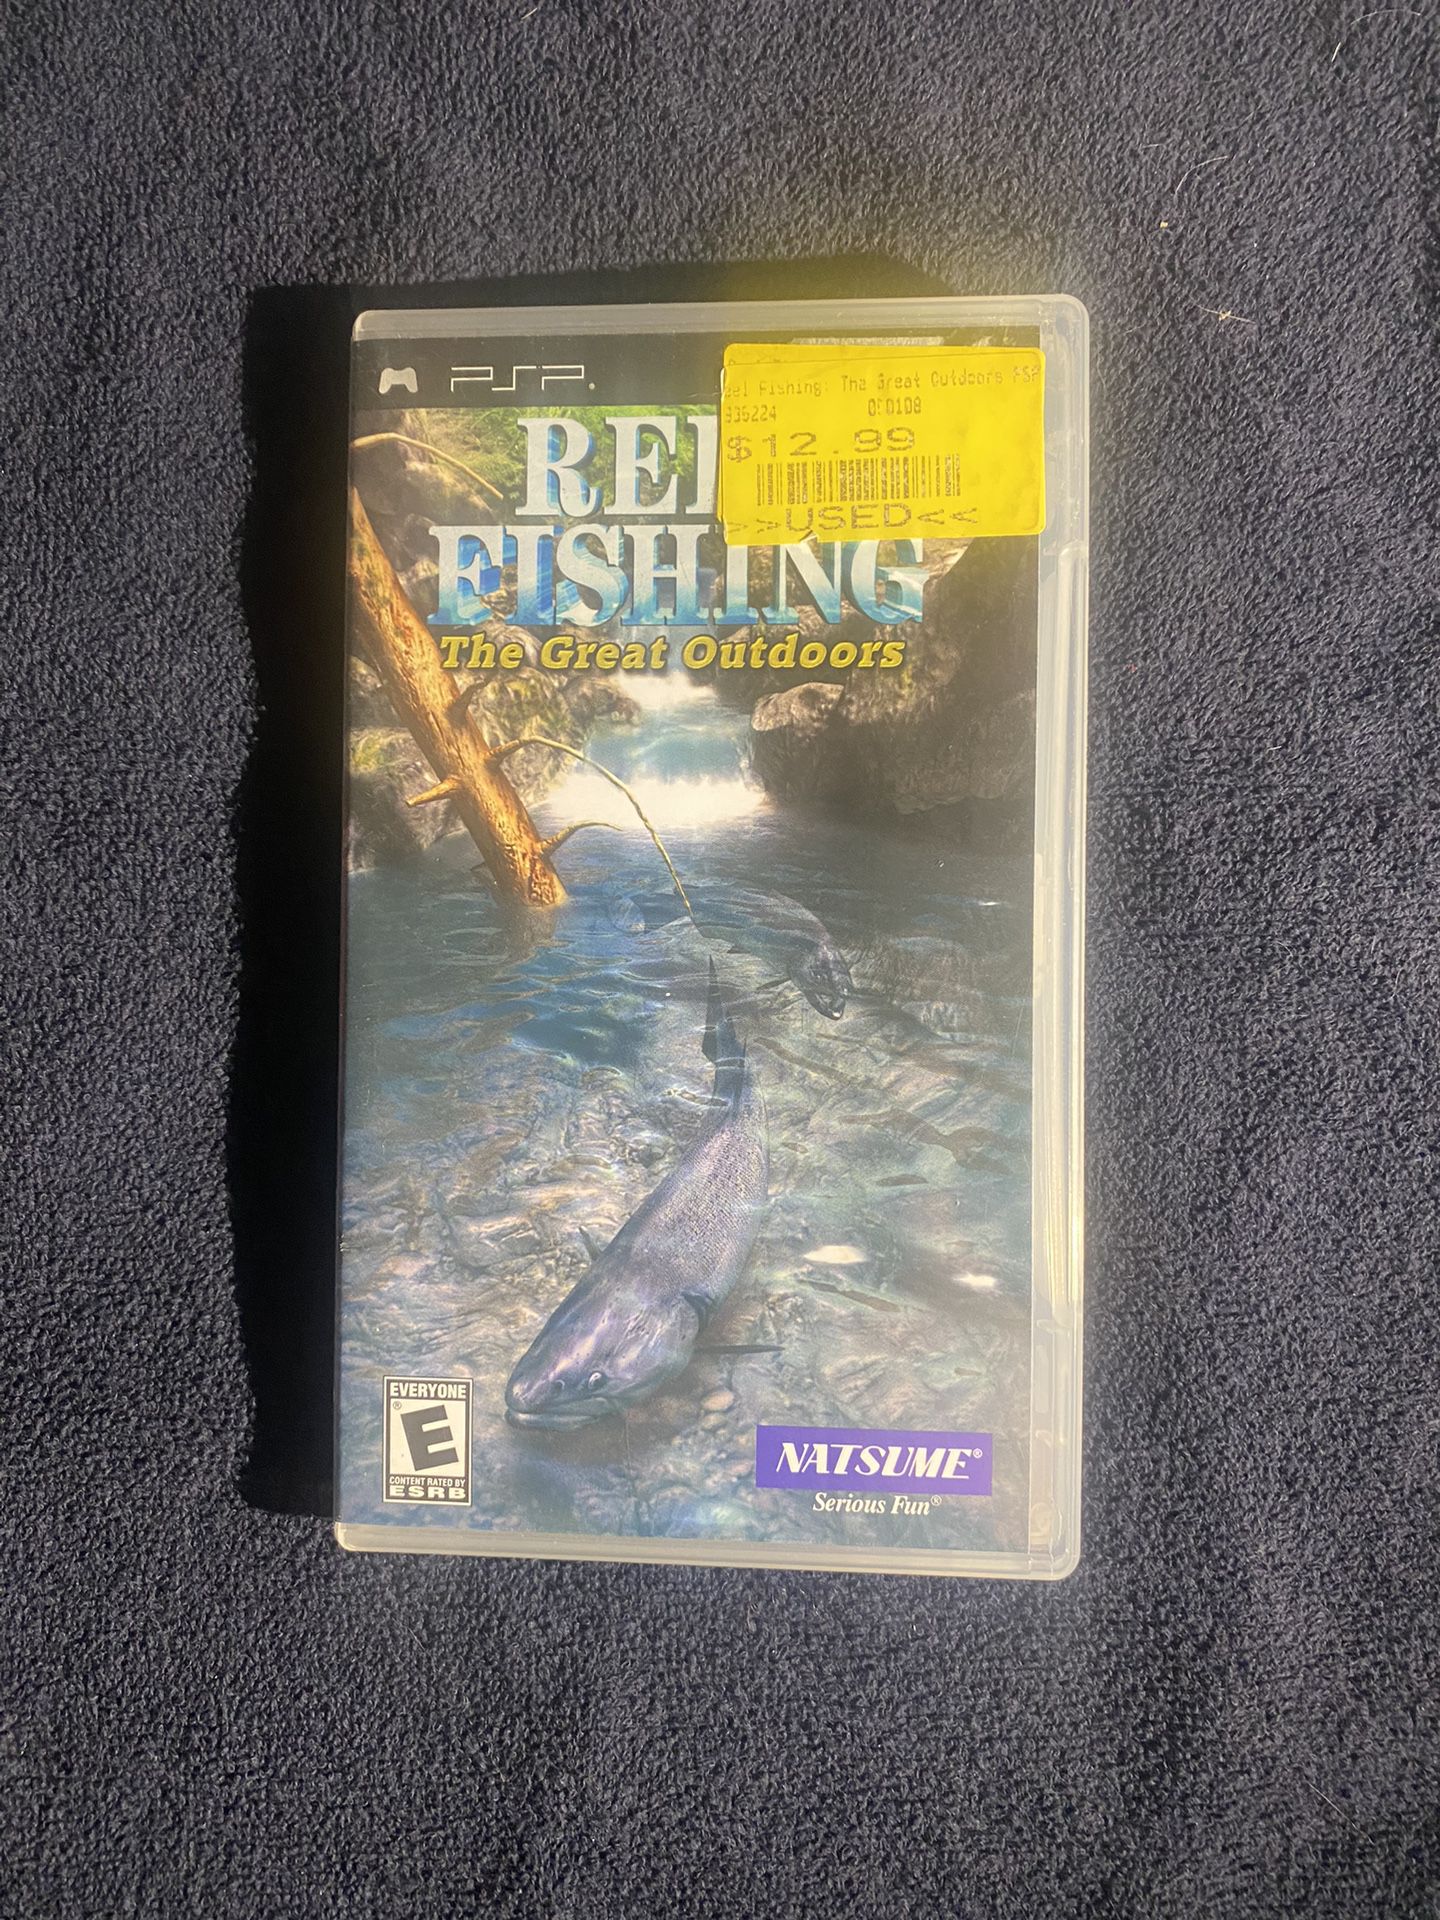 Reel Fishing PSP